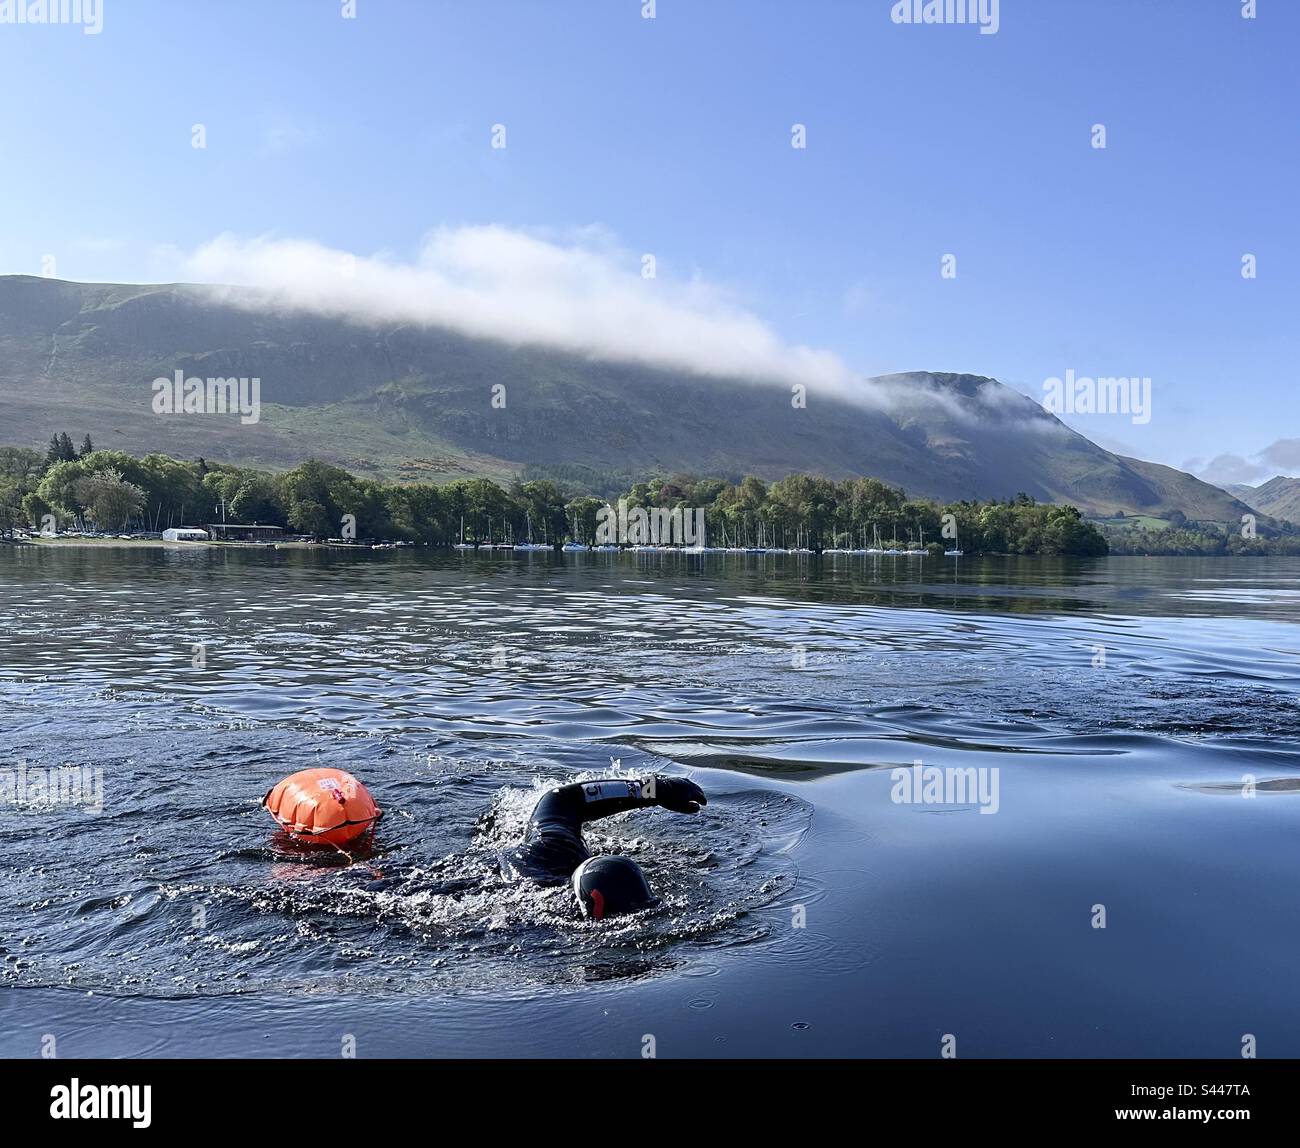 Cold water swim Stock Photo - Alamy